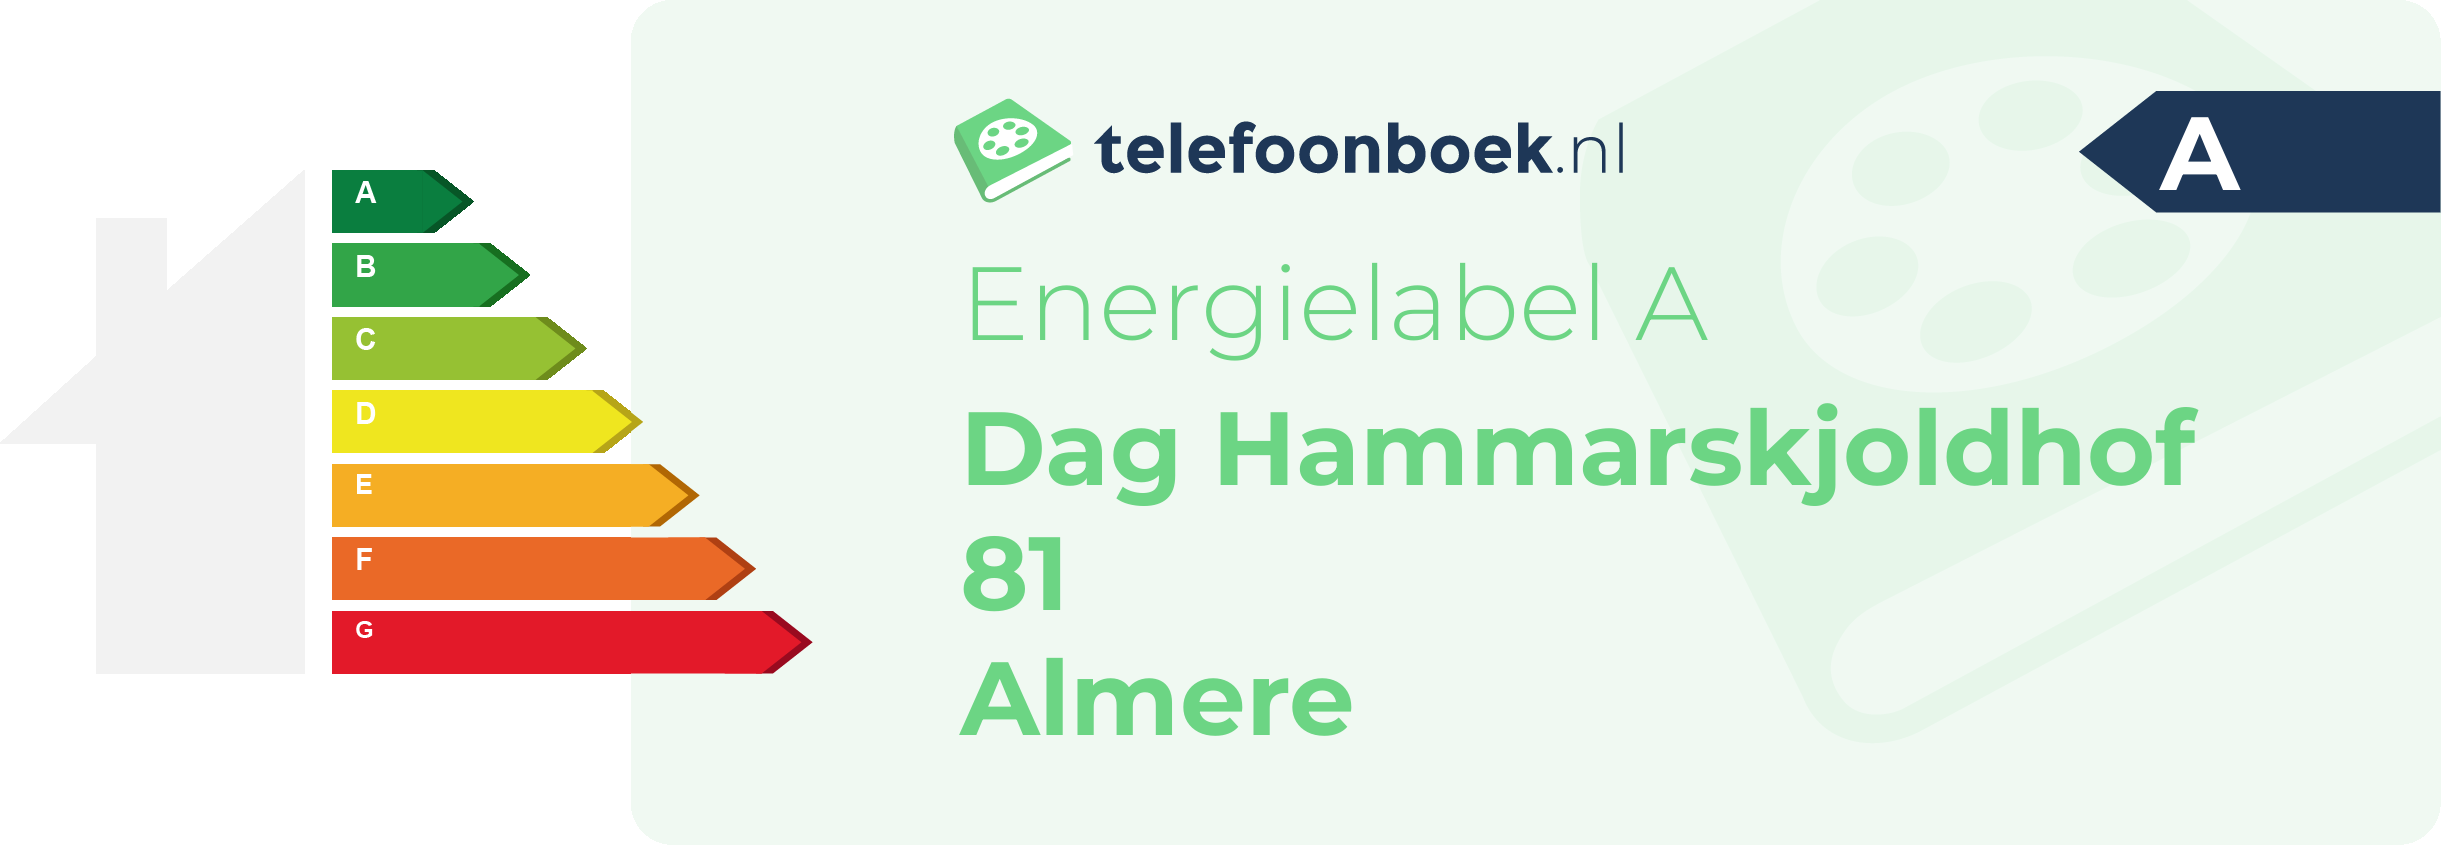 Energielabel Dag Hammarskjoldhof 81 Almere